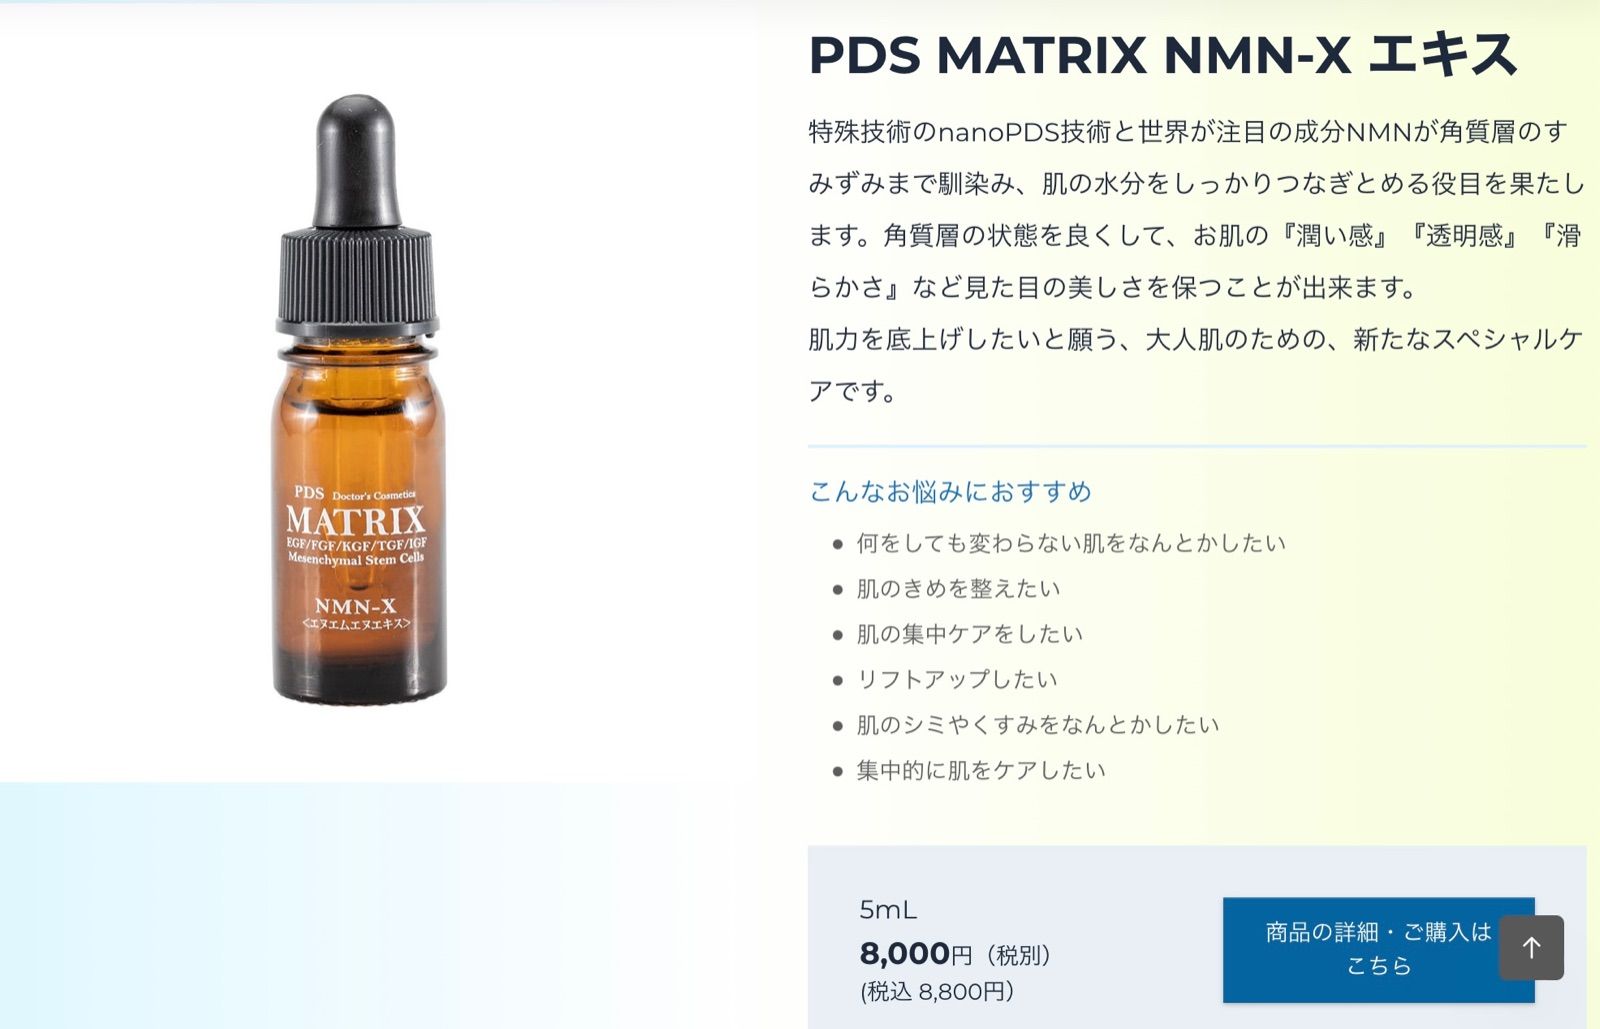 PDSマトリックス NMN-X 5ml 臍帯幹細胞 3本定価:26,400円 - スキンケア 